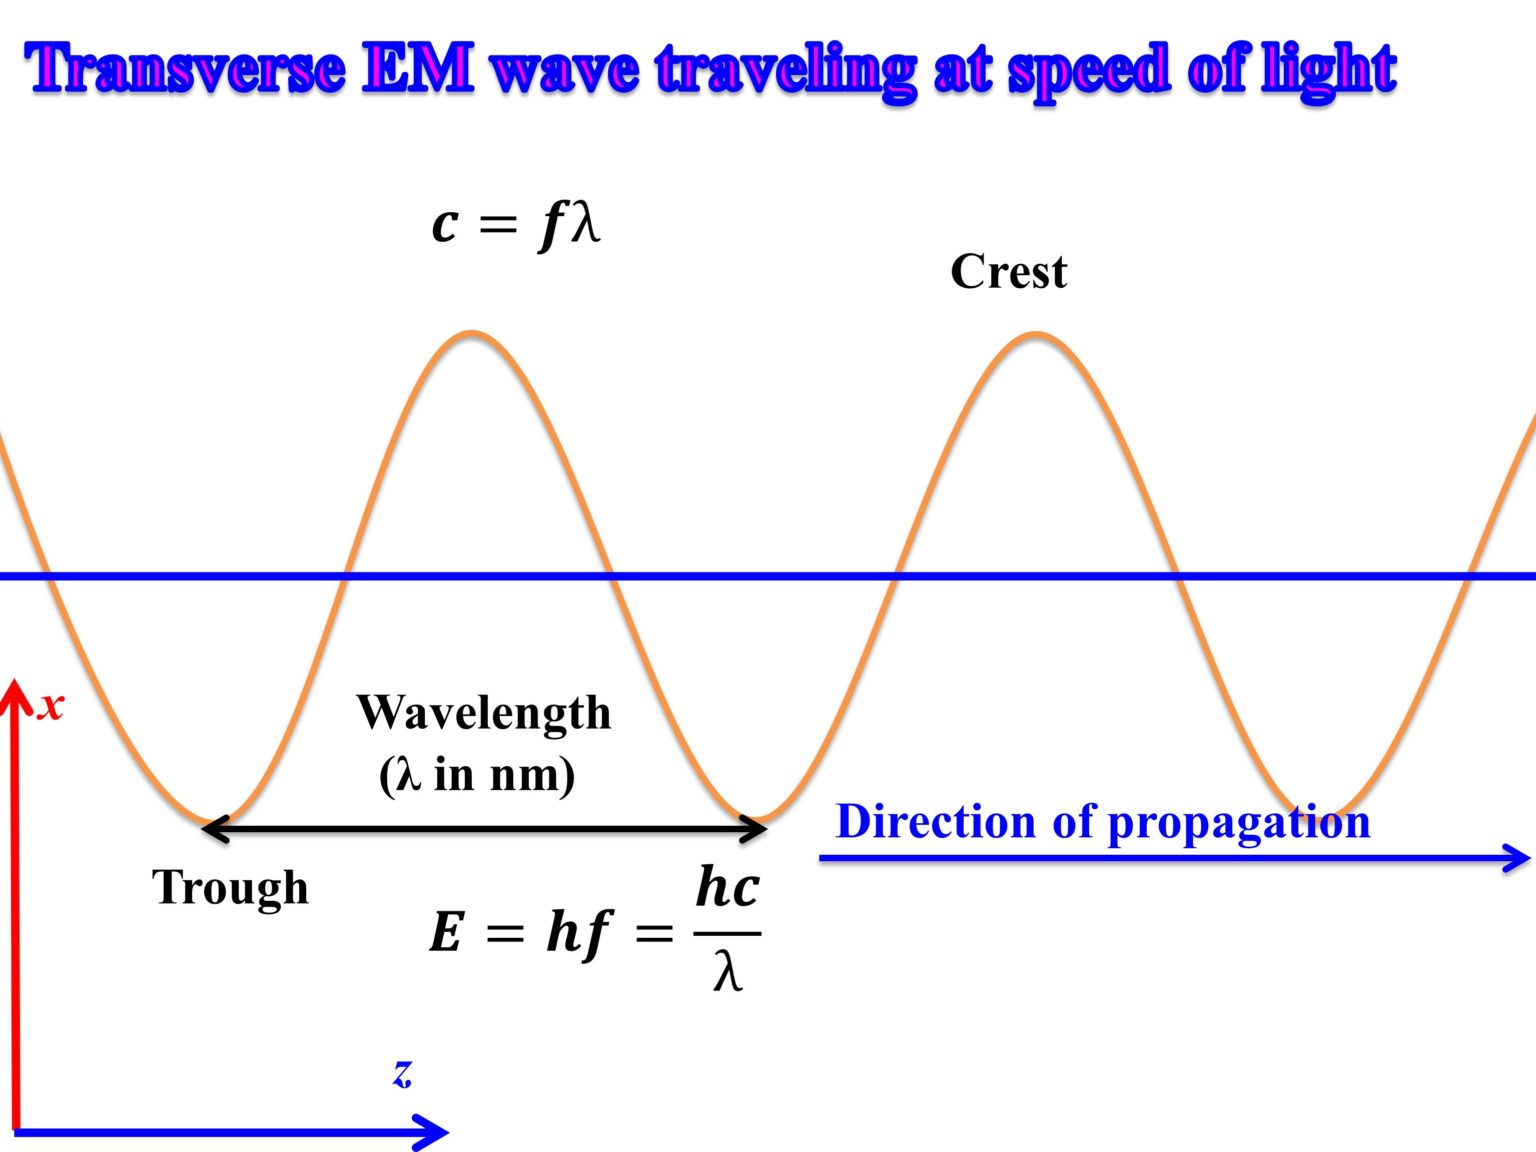 intensity light reflection equation